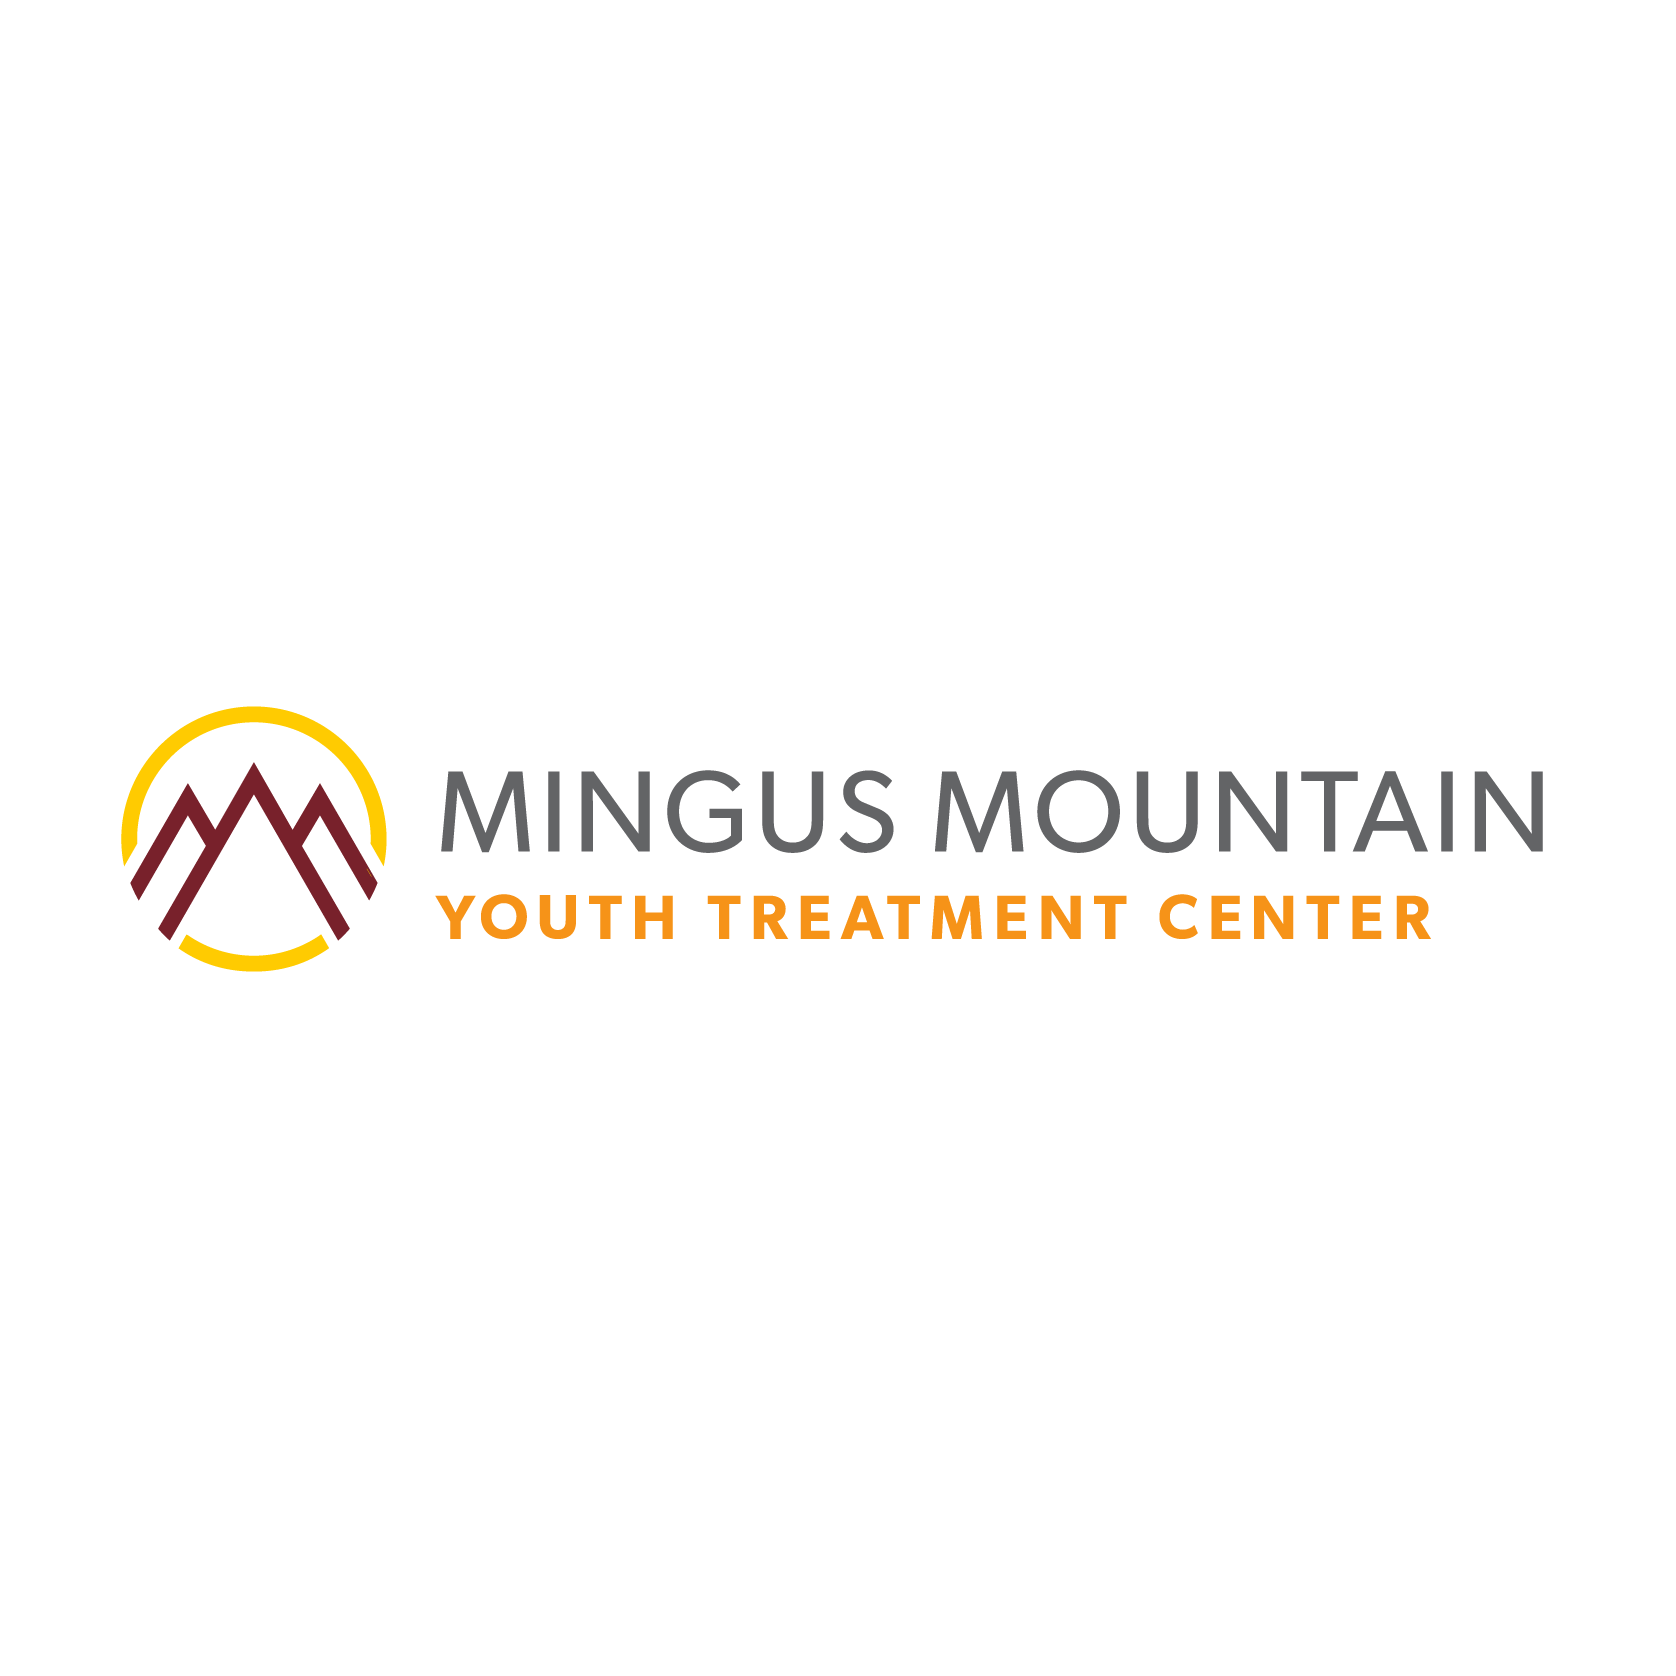 Mingus Mountain Youth Treatment Center